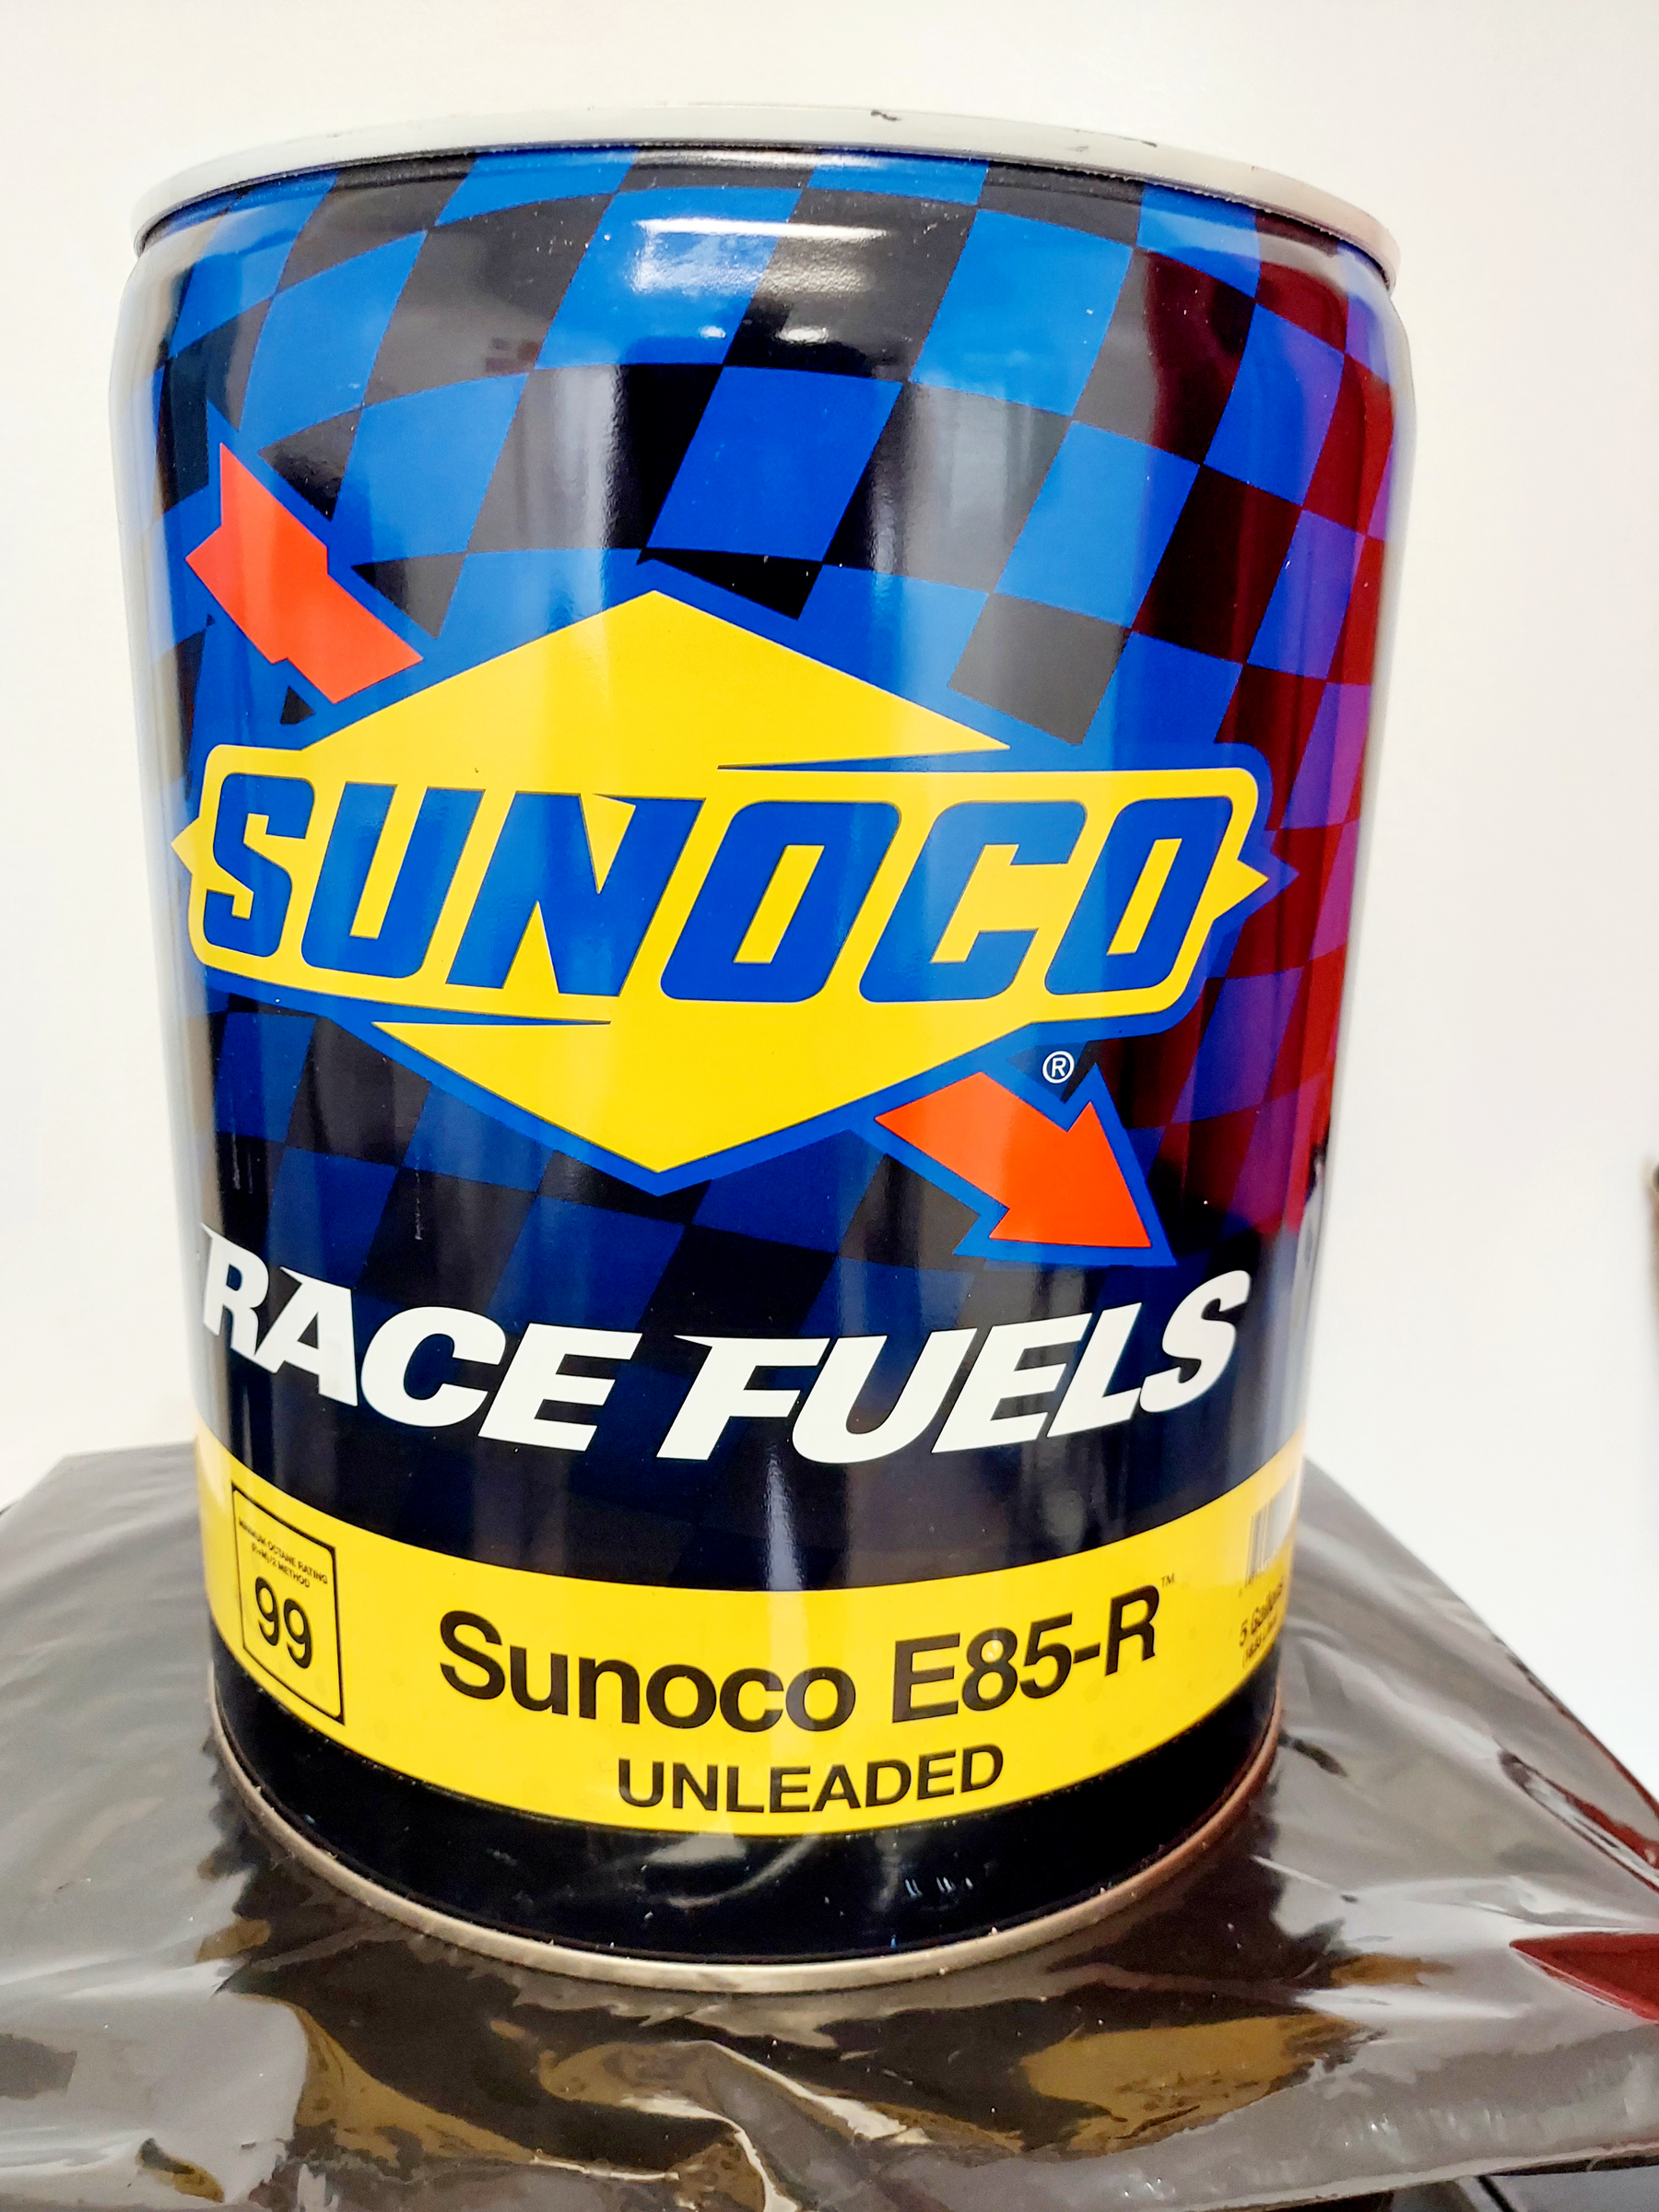 Sunoco's Standards of Quality Fuels & Gasoline, Fuel Grades